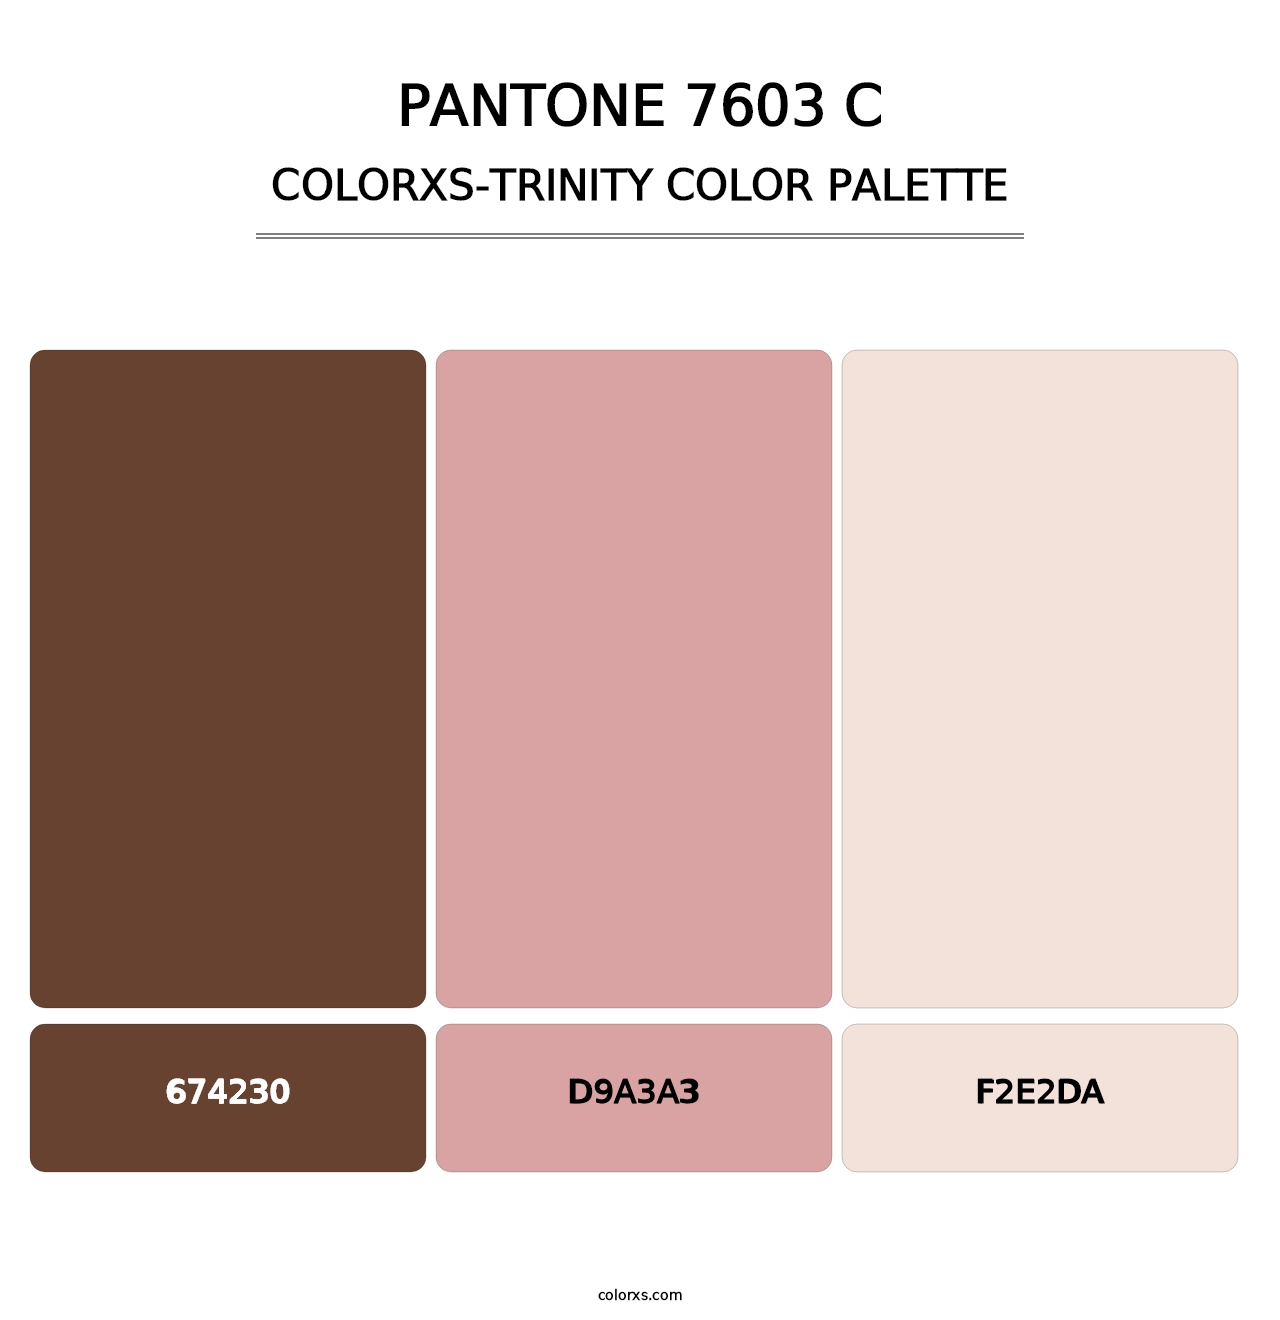 PANTONE 7603 C - Colorxs Trinity Palette